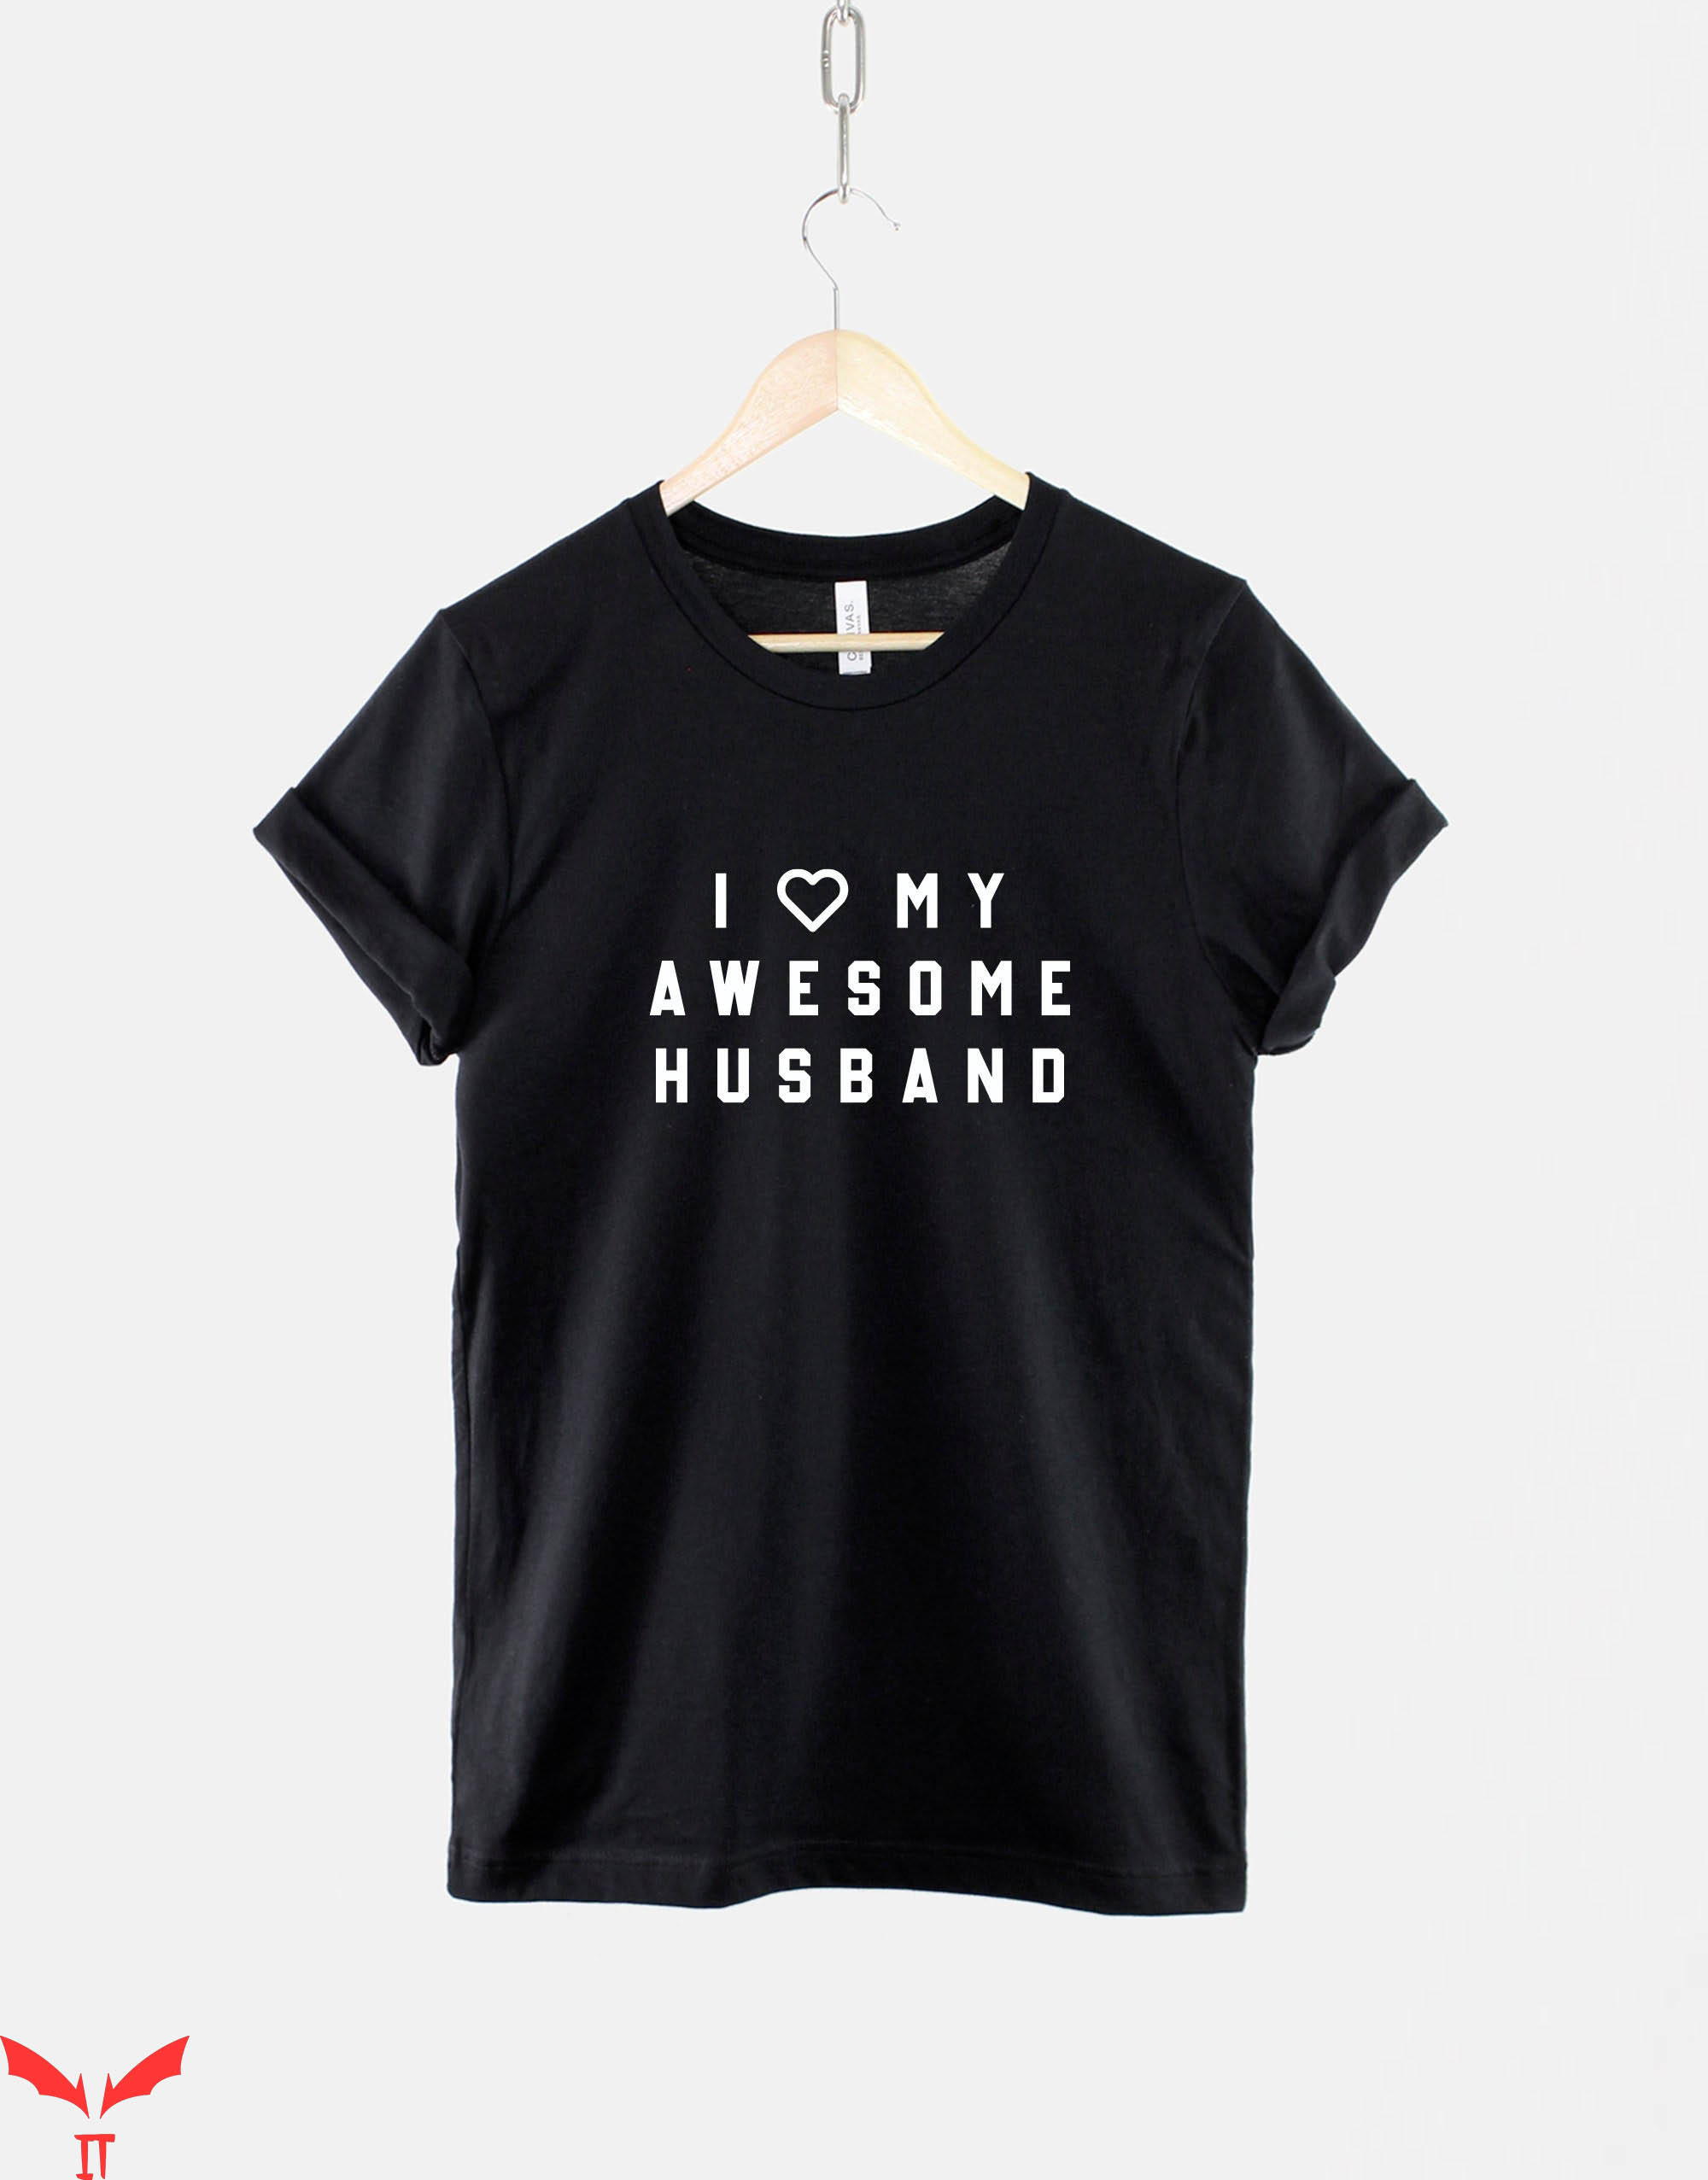 I Heart My BF T-Shirt I Love My Awesome Husband Tee Shirt